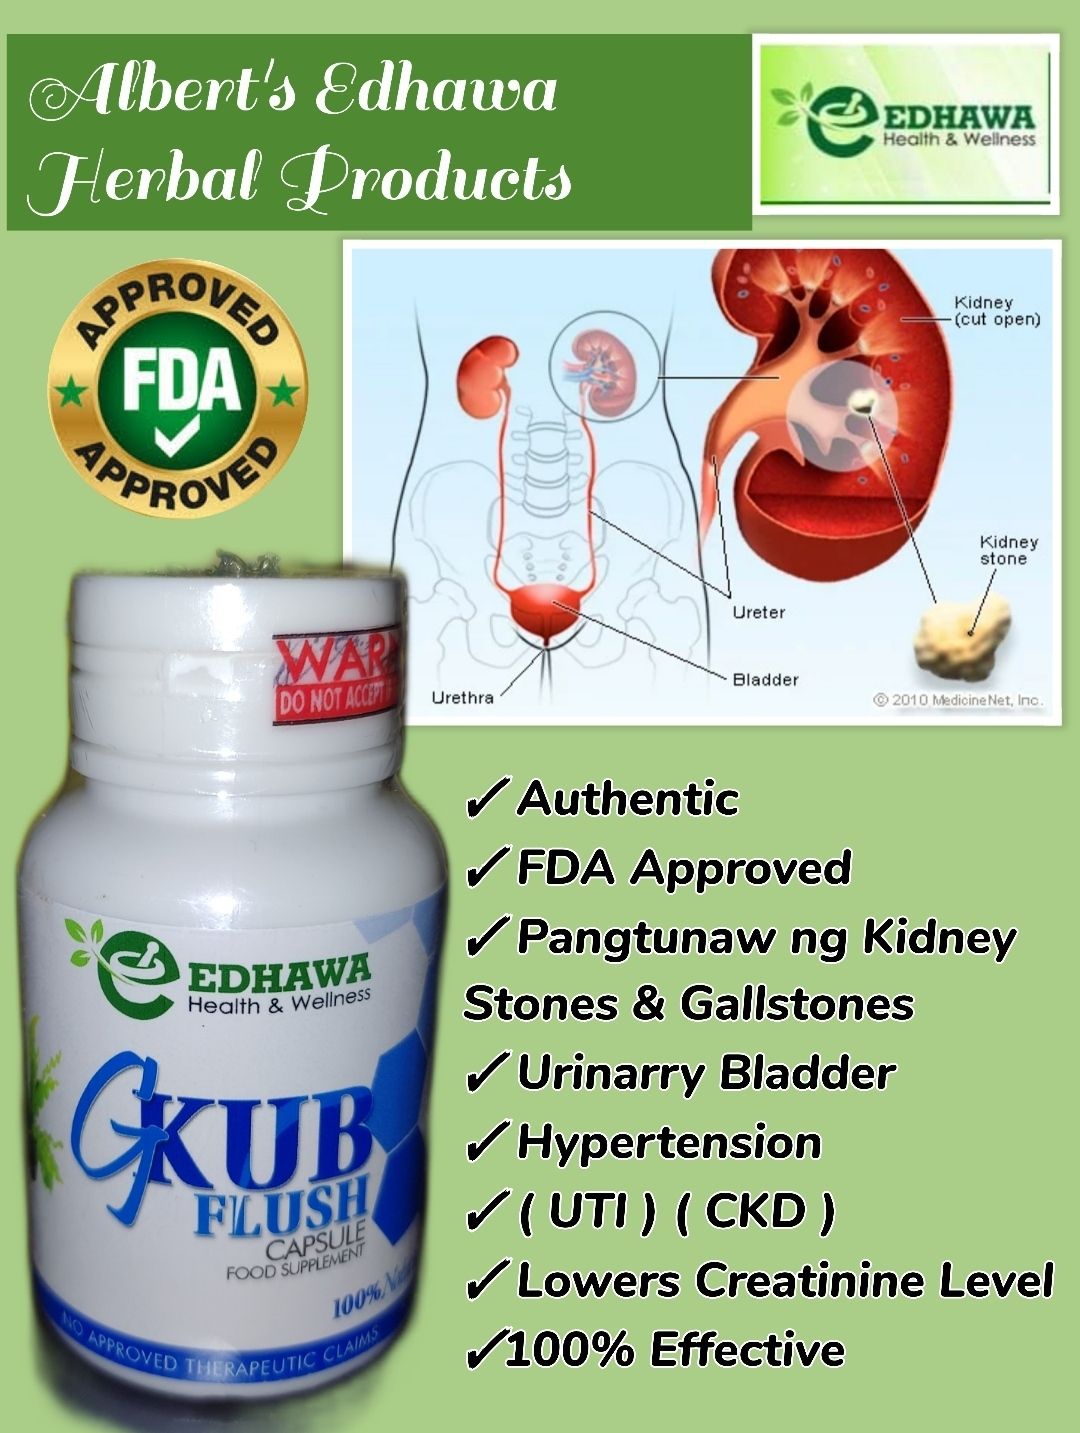 Edhawa Gkub Flush | Dialysis Prevention | Herbal Kidney Treatment